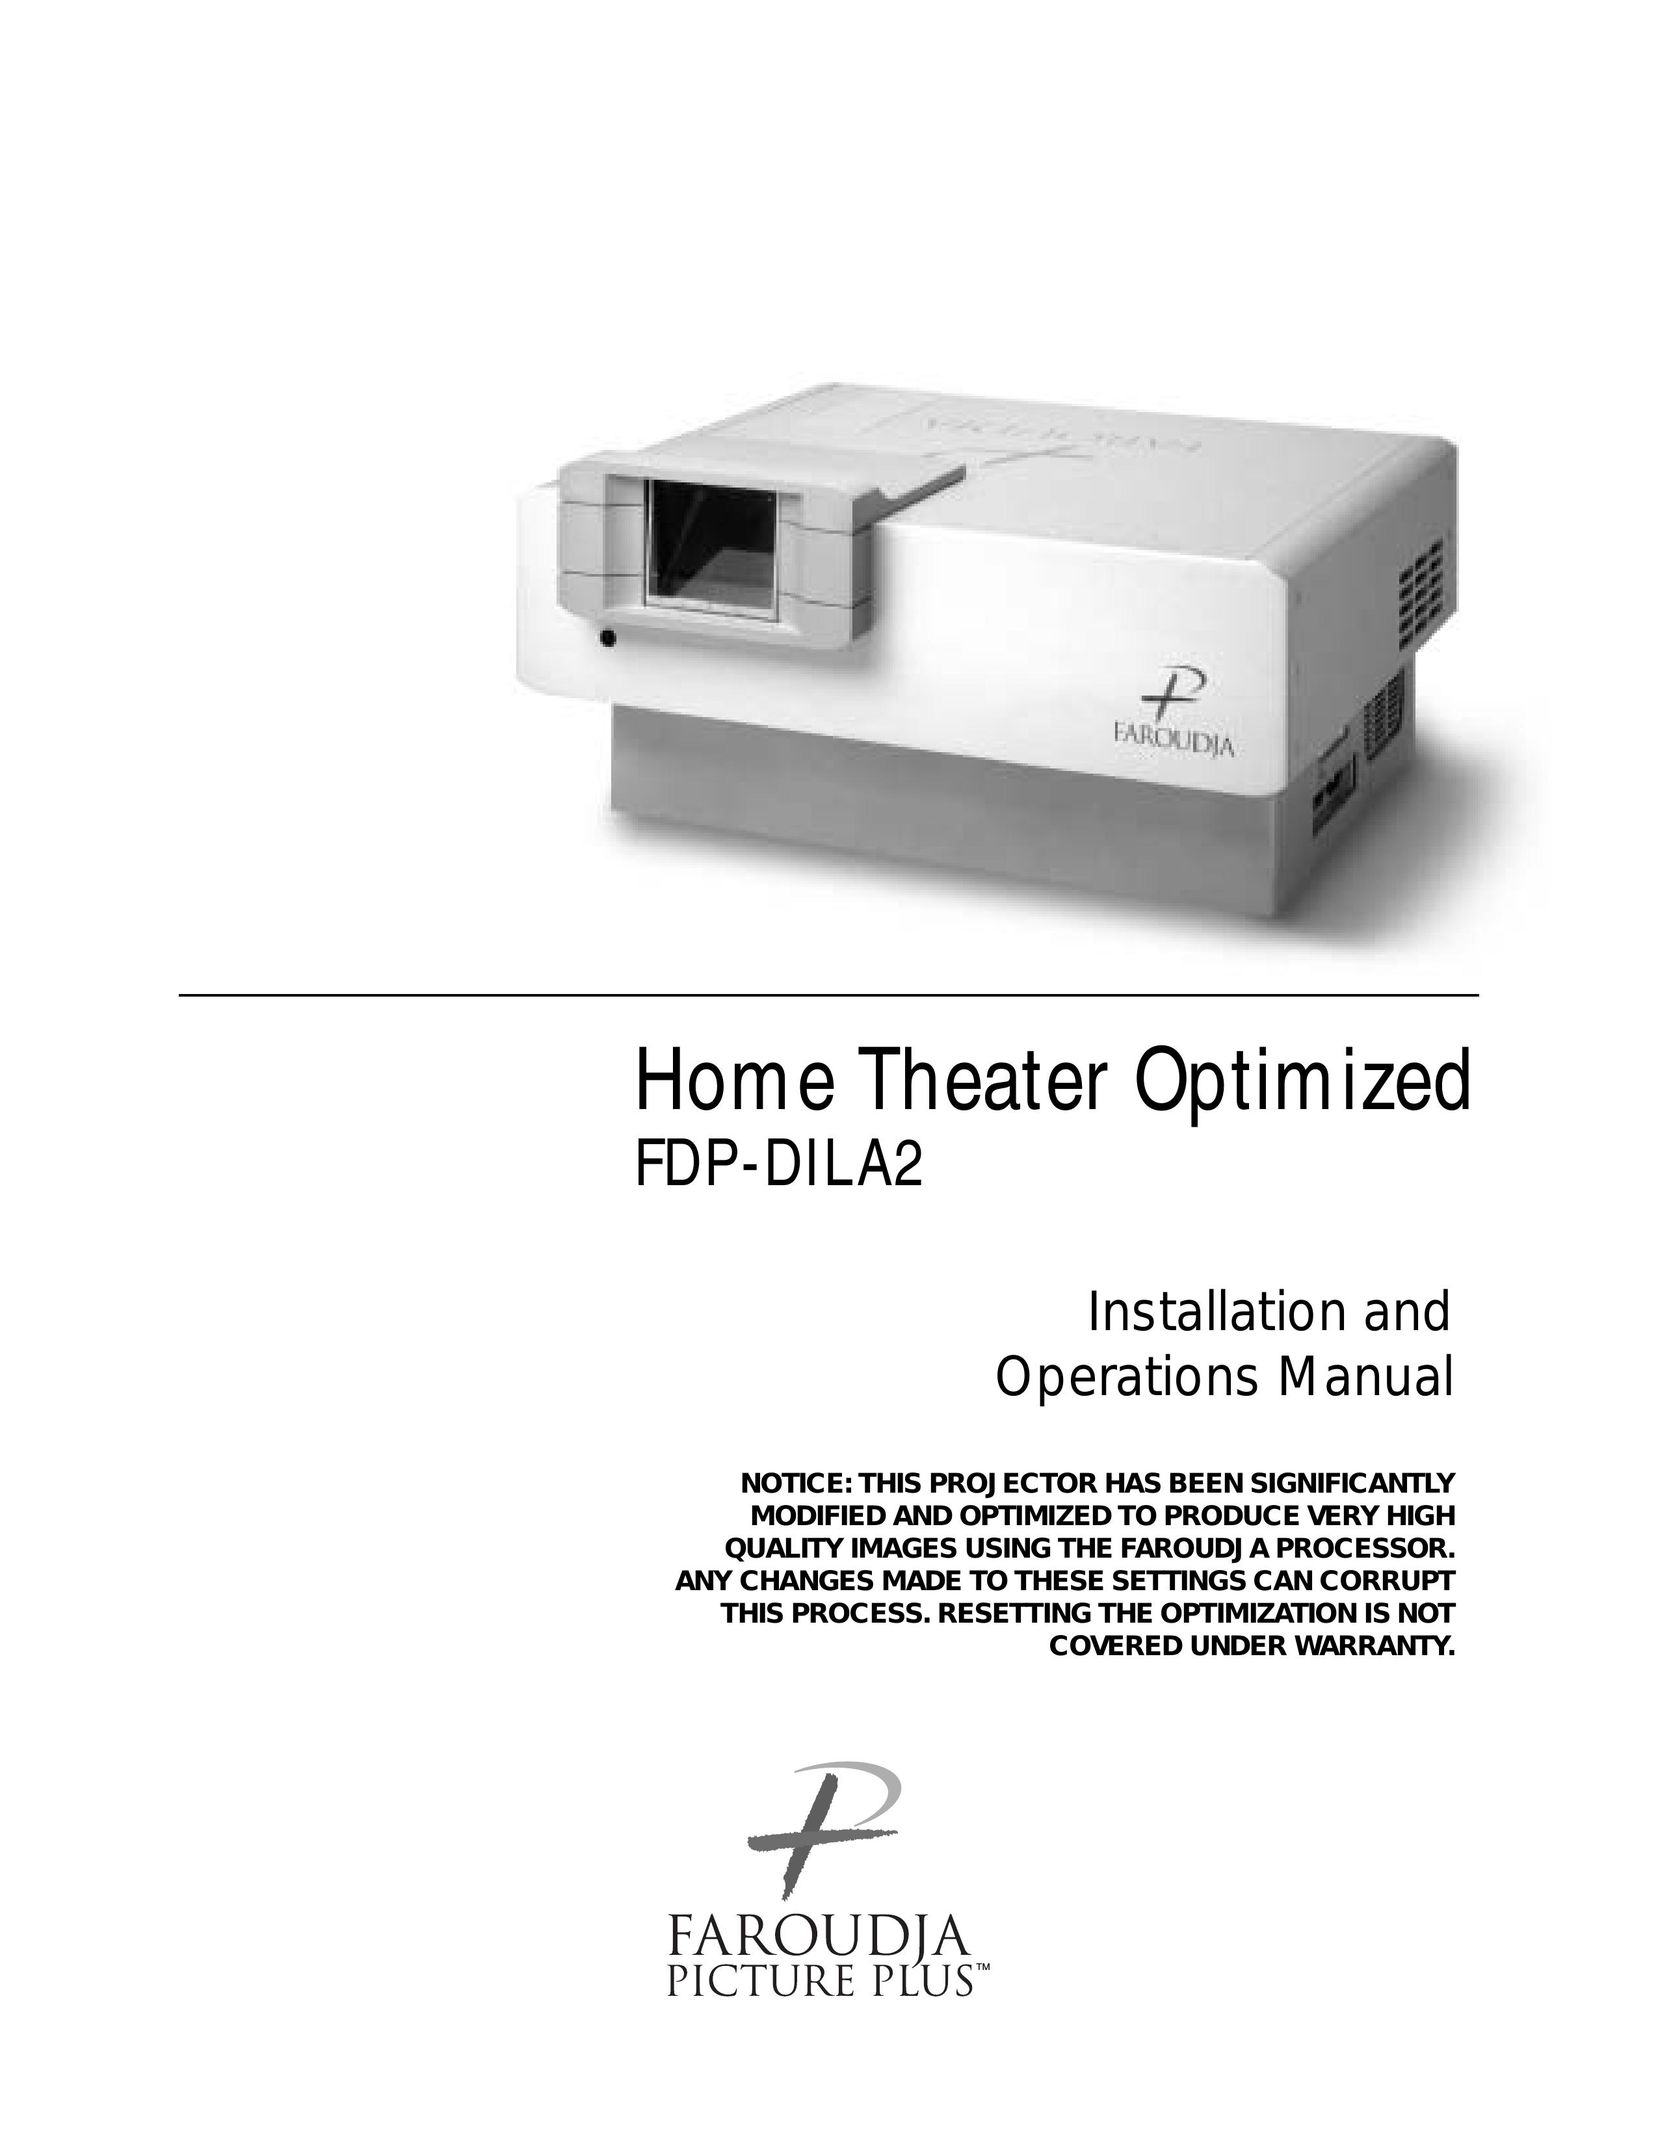 Meridian Audio FDP-DILA2 Home Theater System User Manual